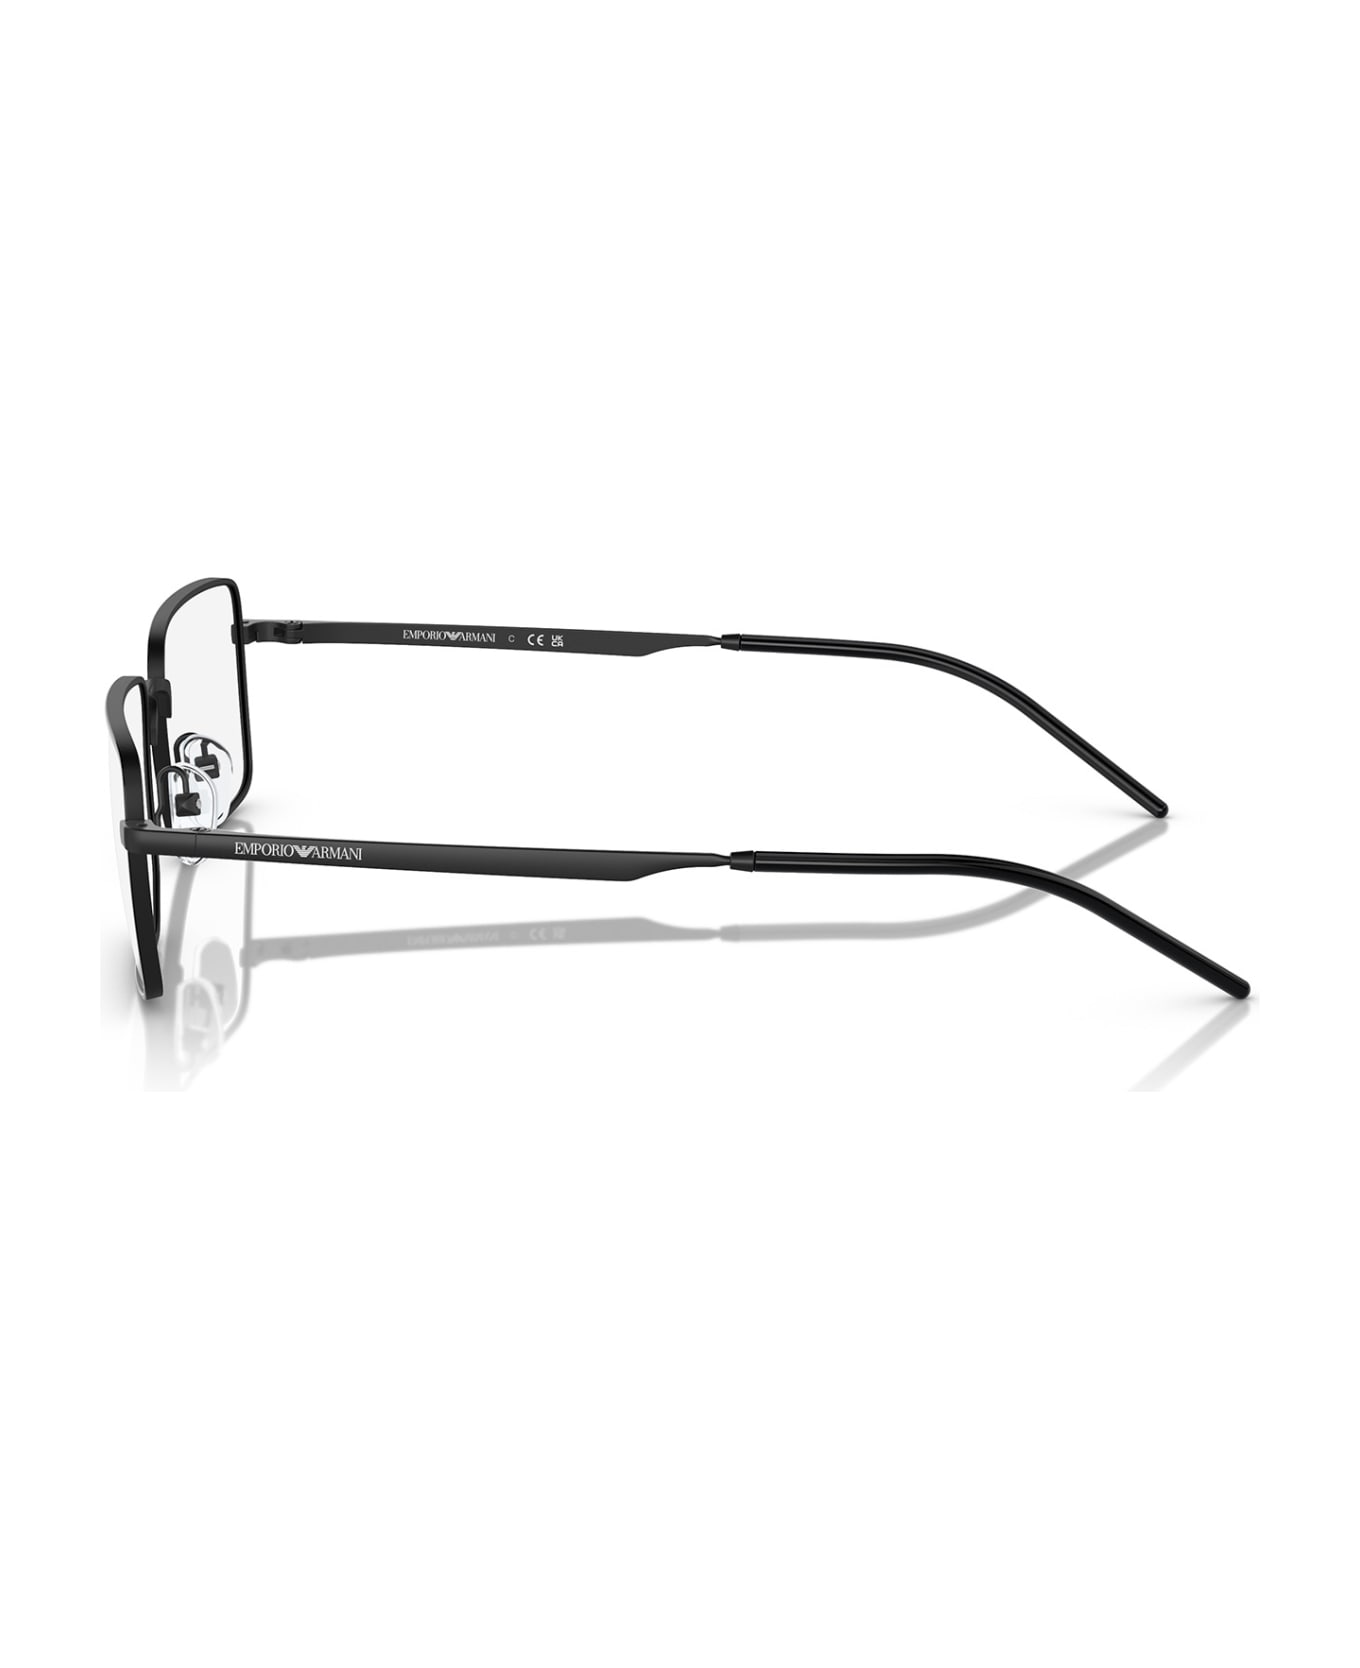 Emporio Armani Ea1153 Matte Black Glasses - Matte Black アイウェア